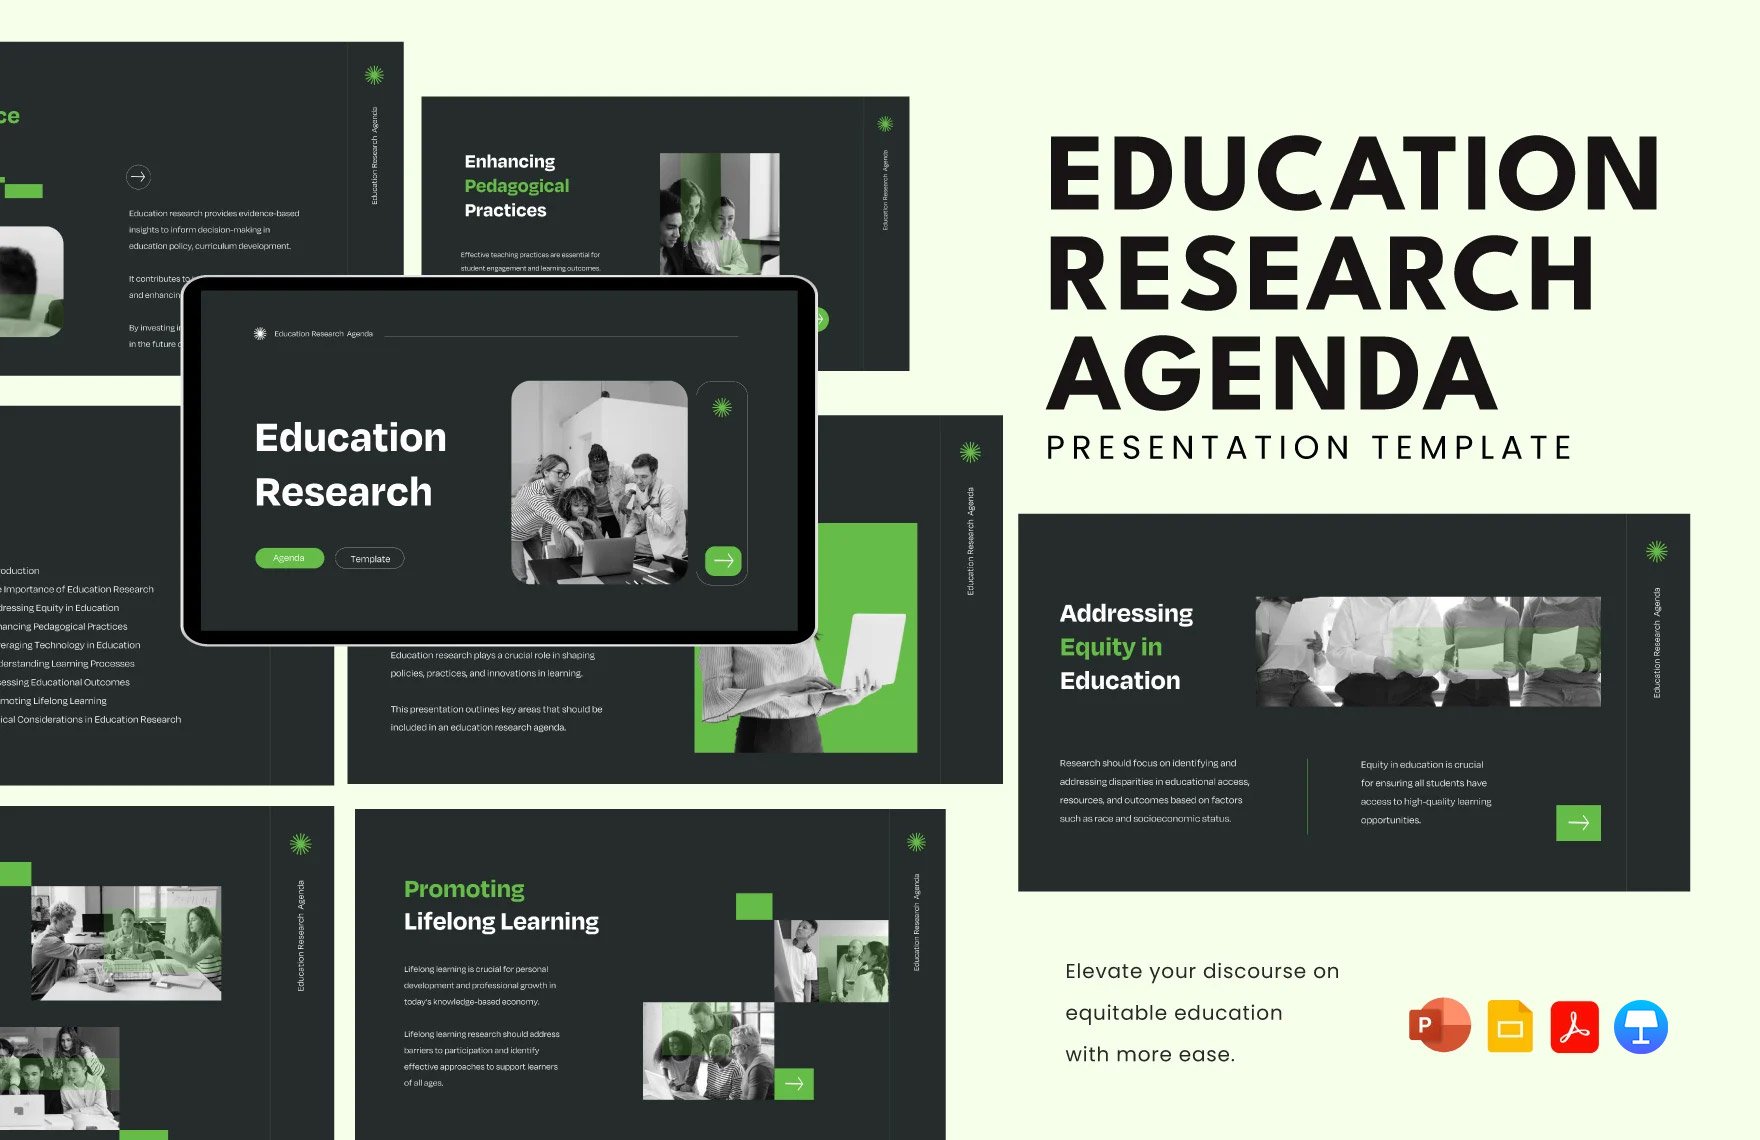 Education Research Agenda Template